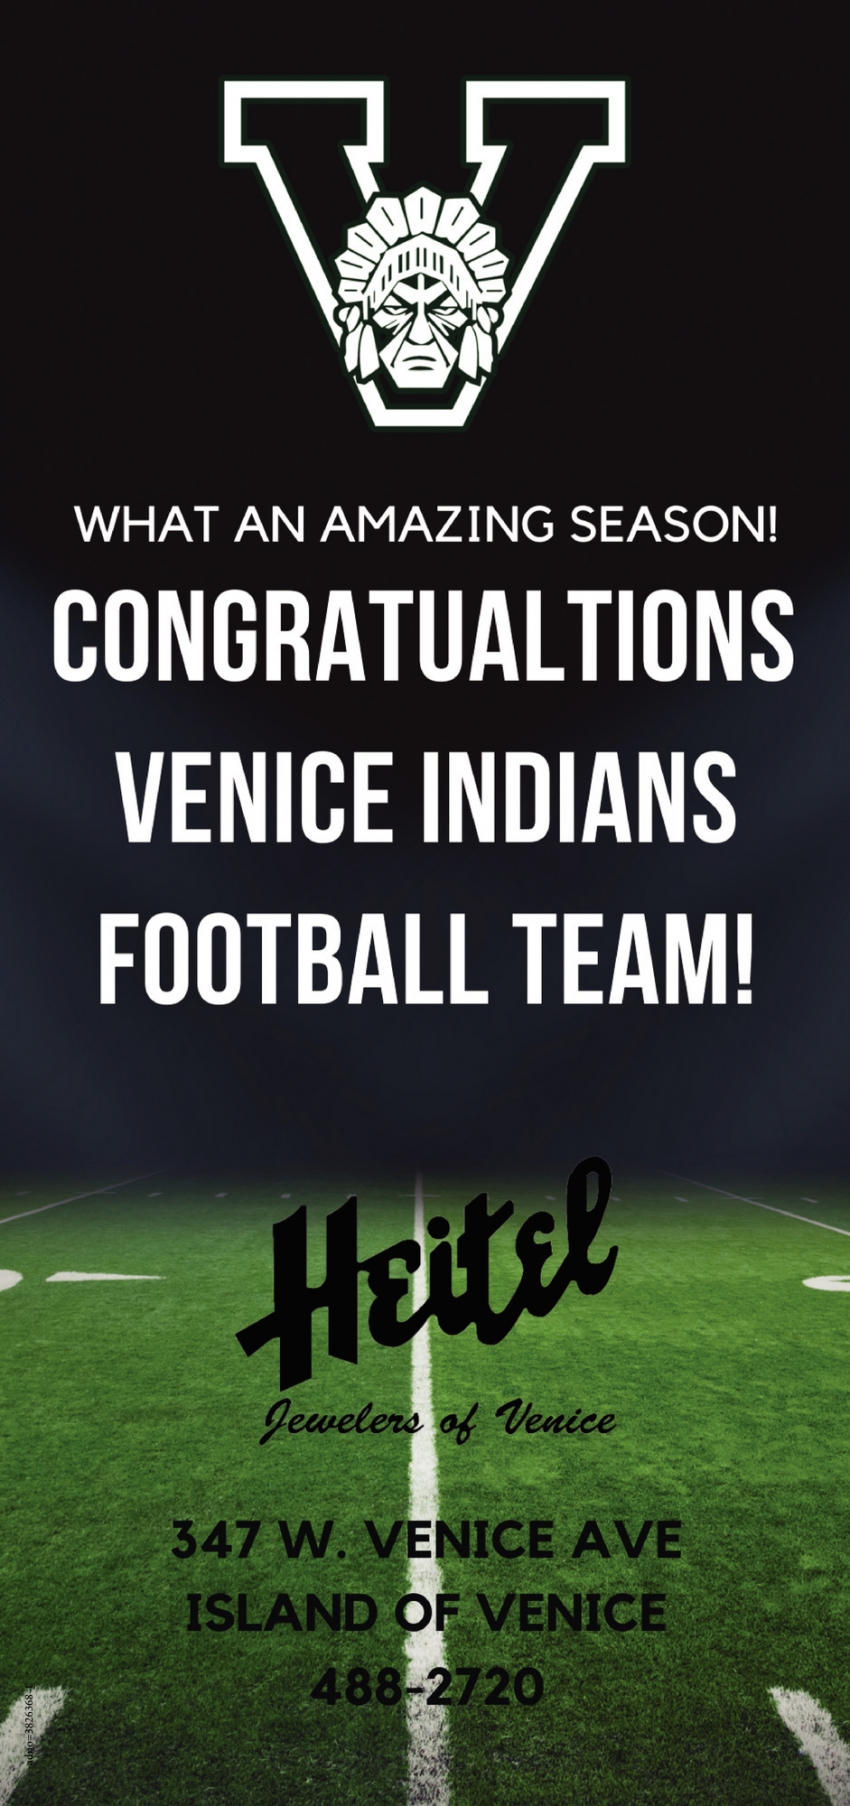 Congratulations Venice Indians